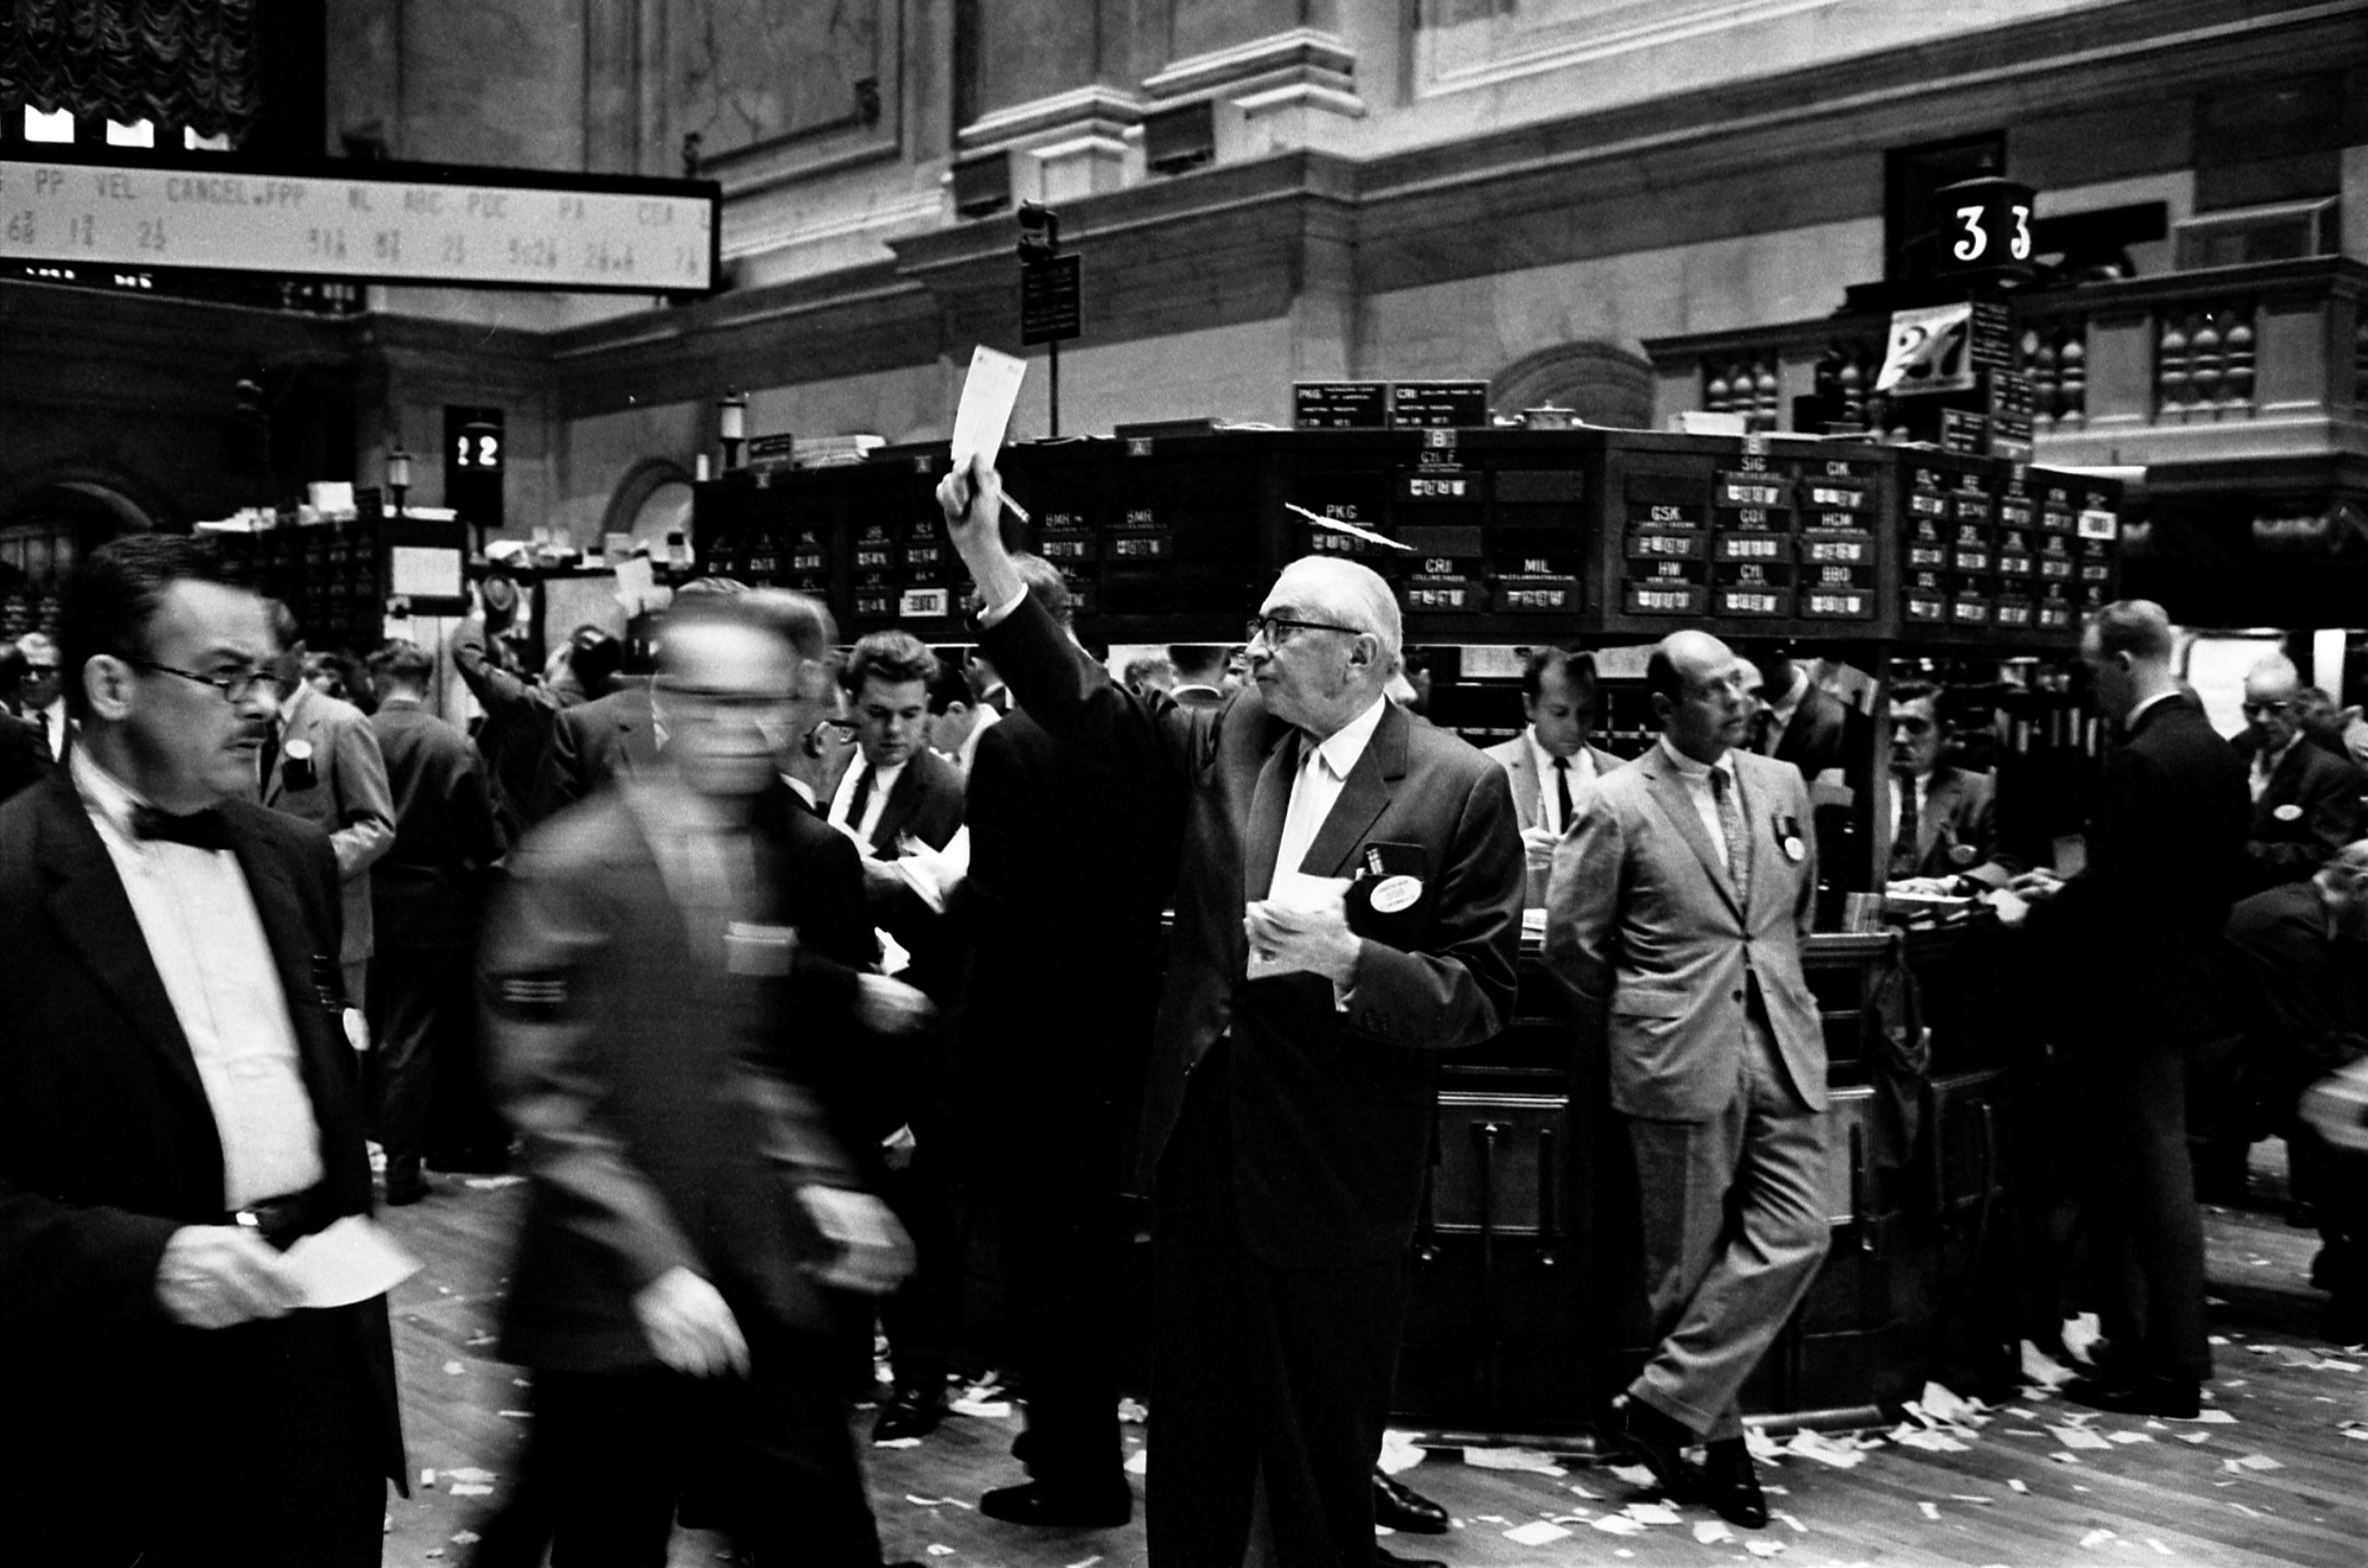 Business Insider: A bond market insider explains why the market is illiquid